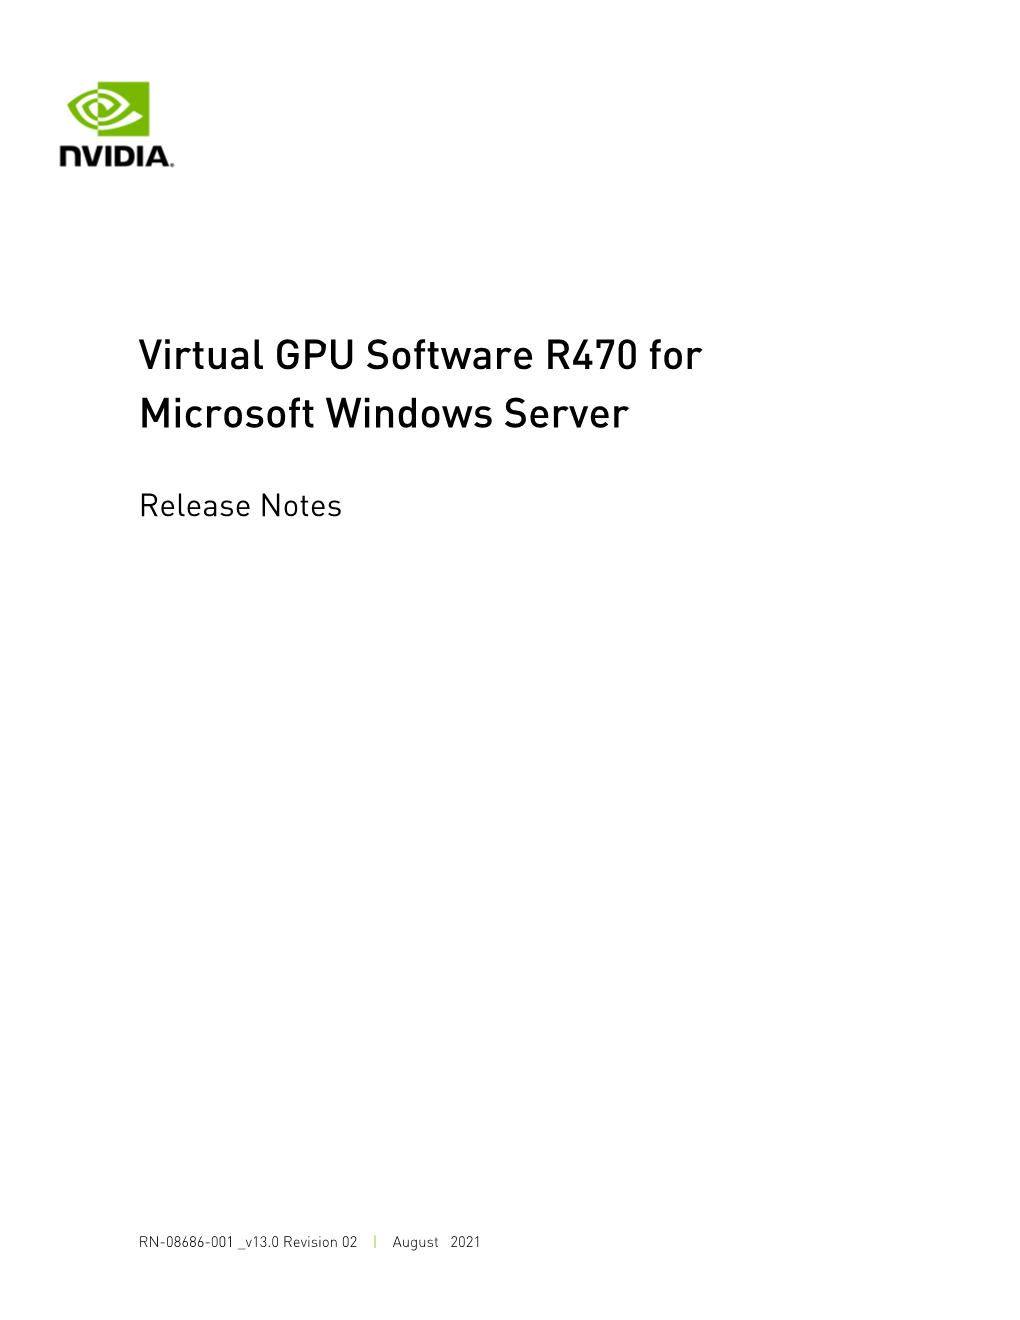 Virtual GPU Software R470 for Microsoft Windows Server